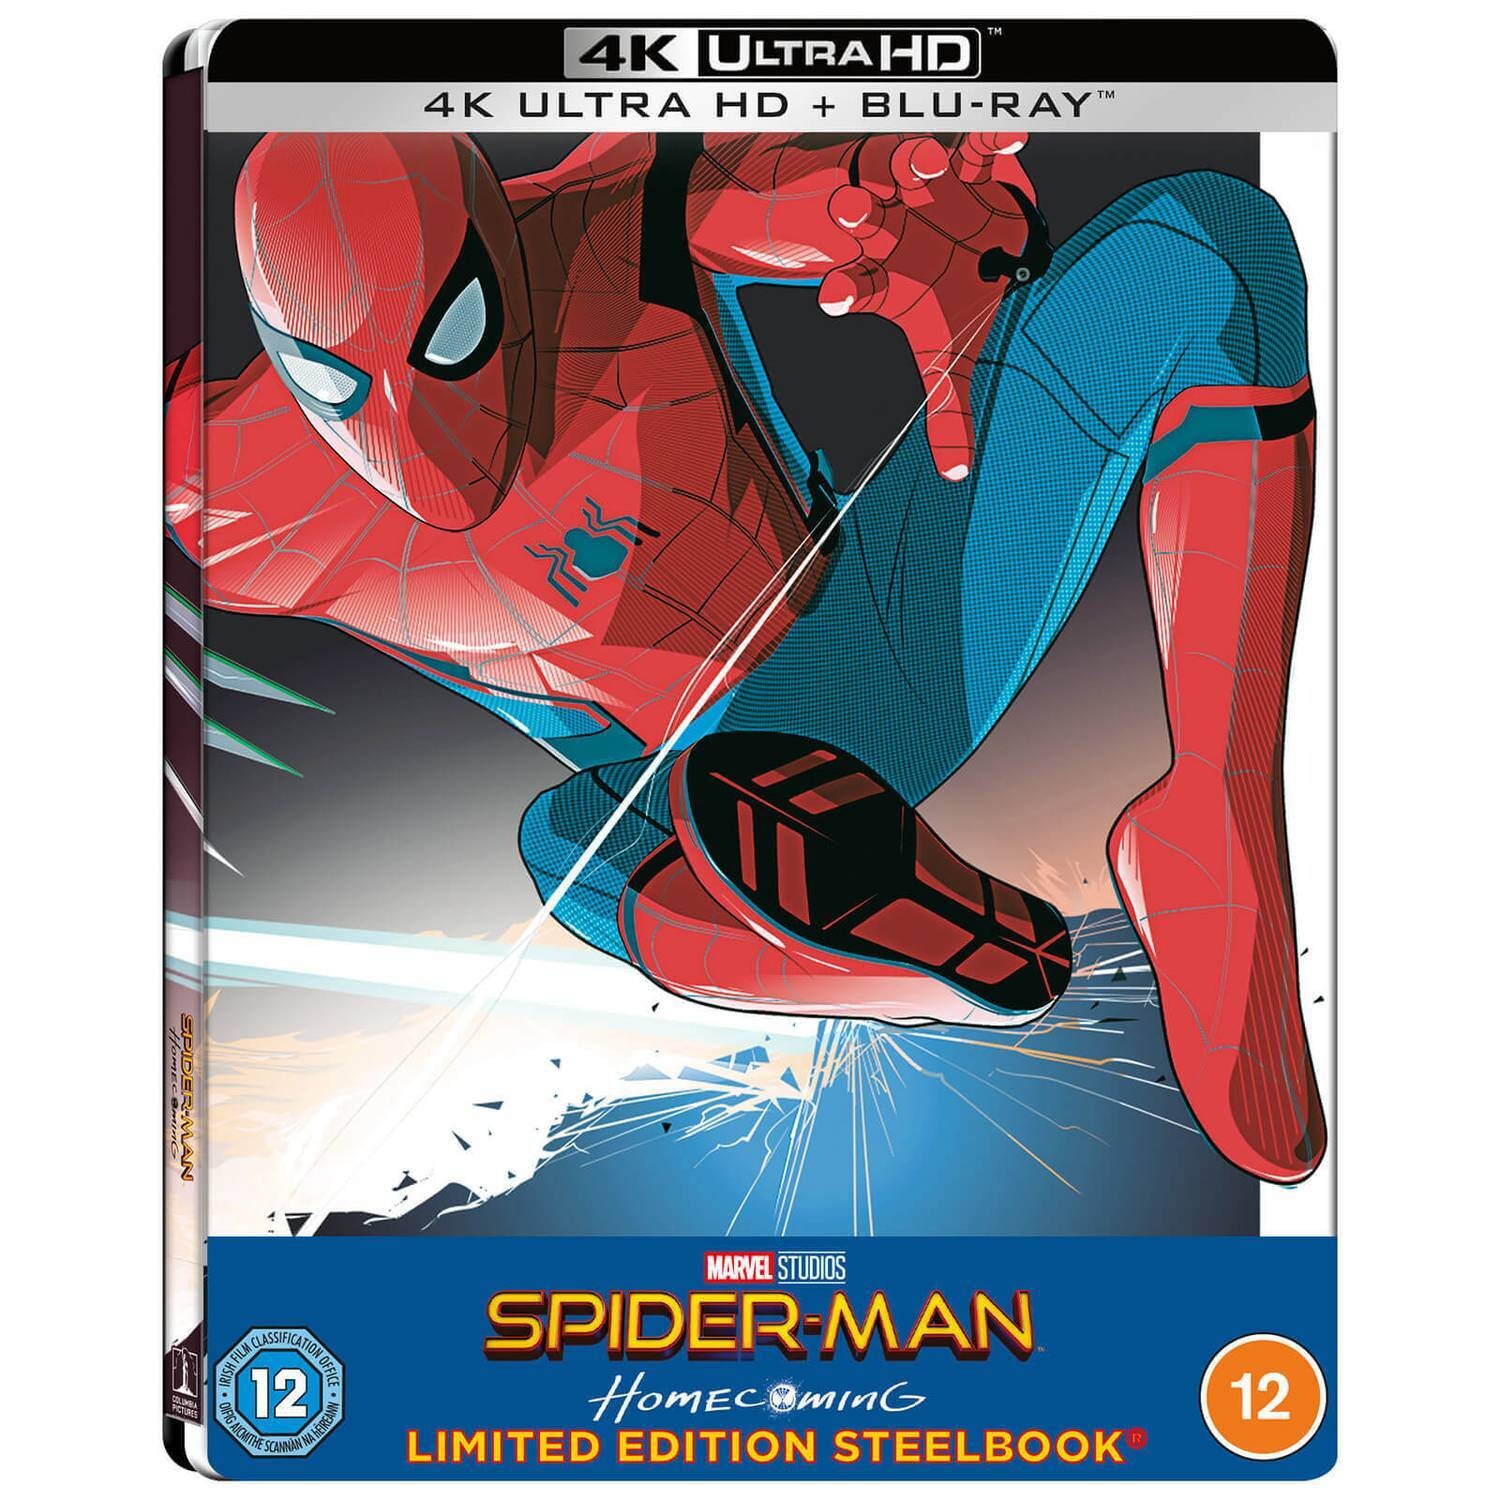 Spider-Man Homecoming (2017) 4k Ultra HD + Blu-ray [Limited Edition] [Region Free]